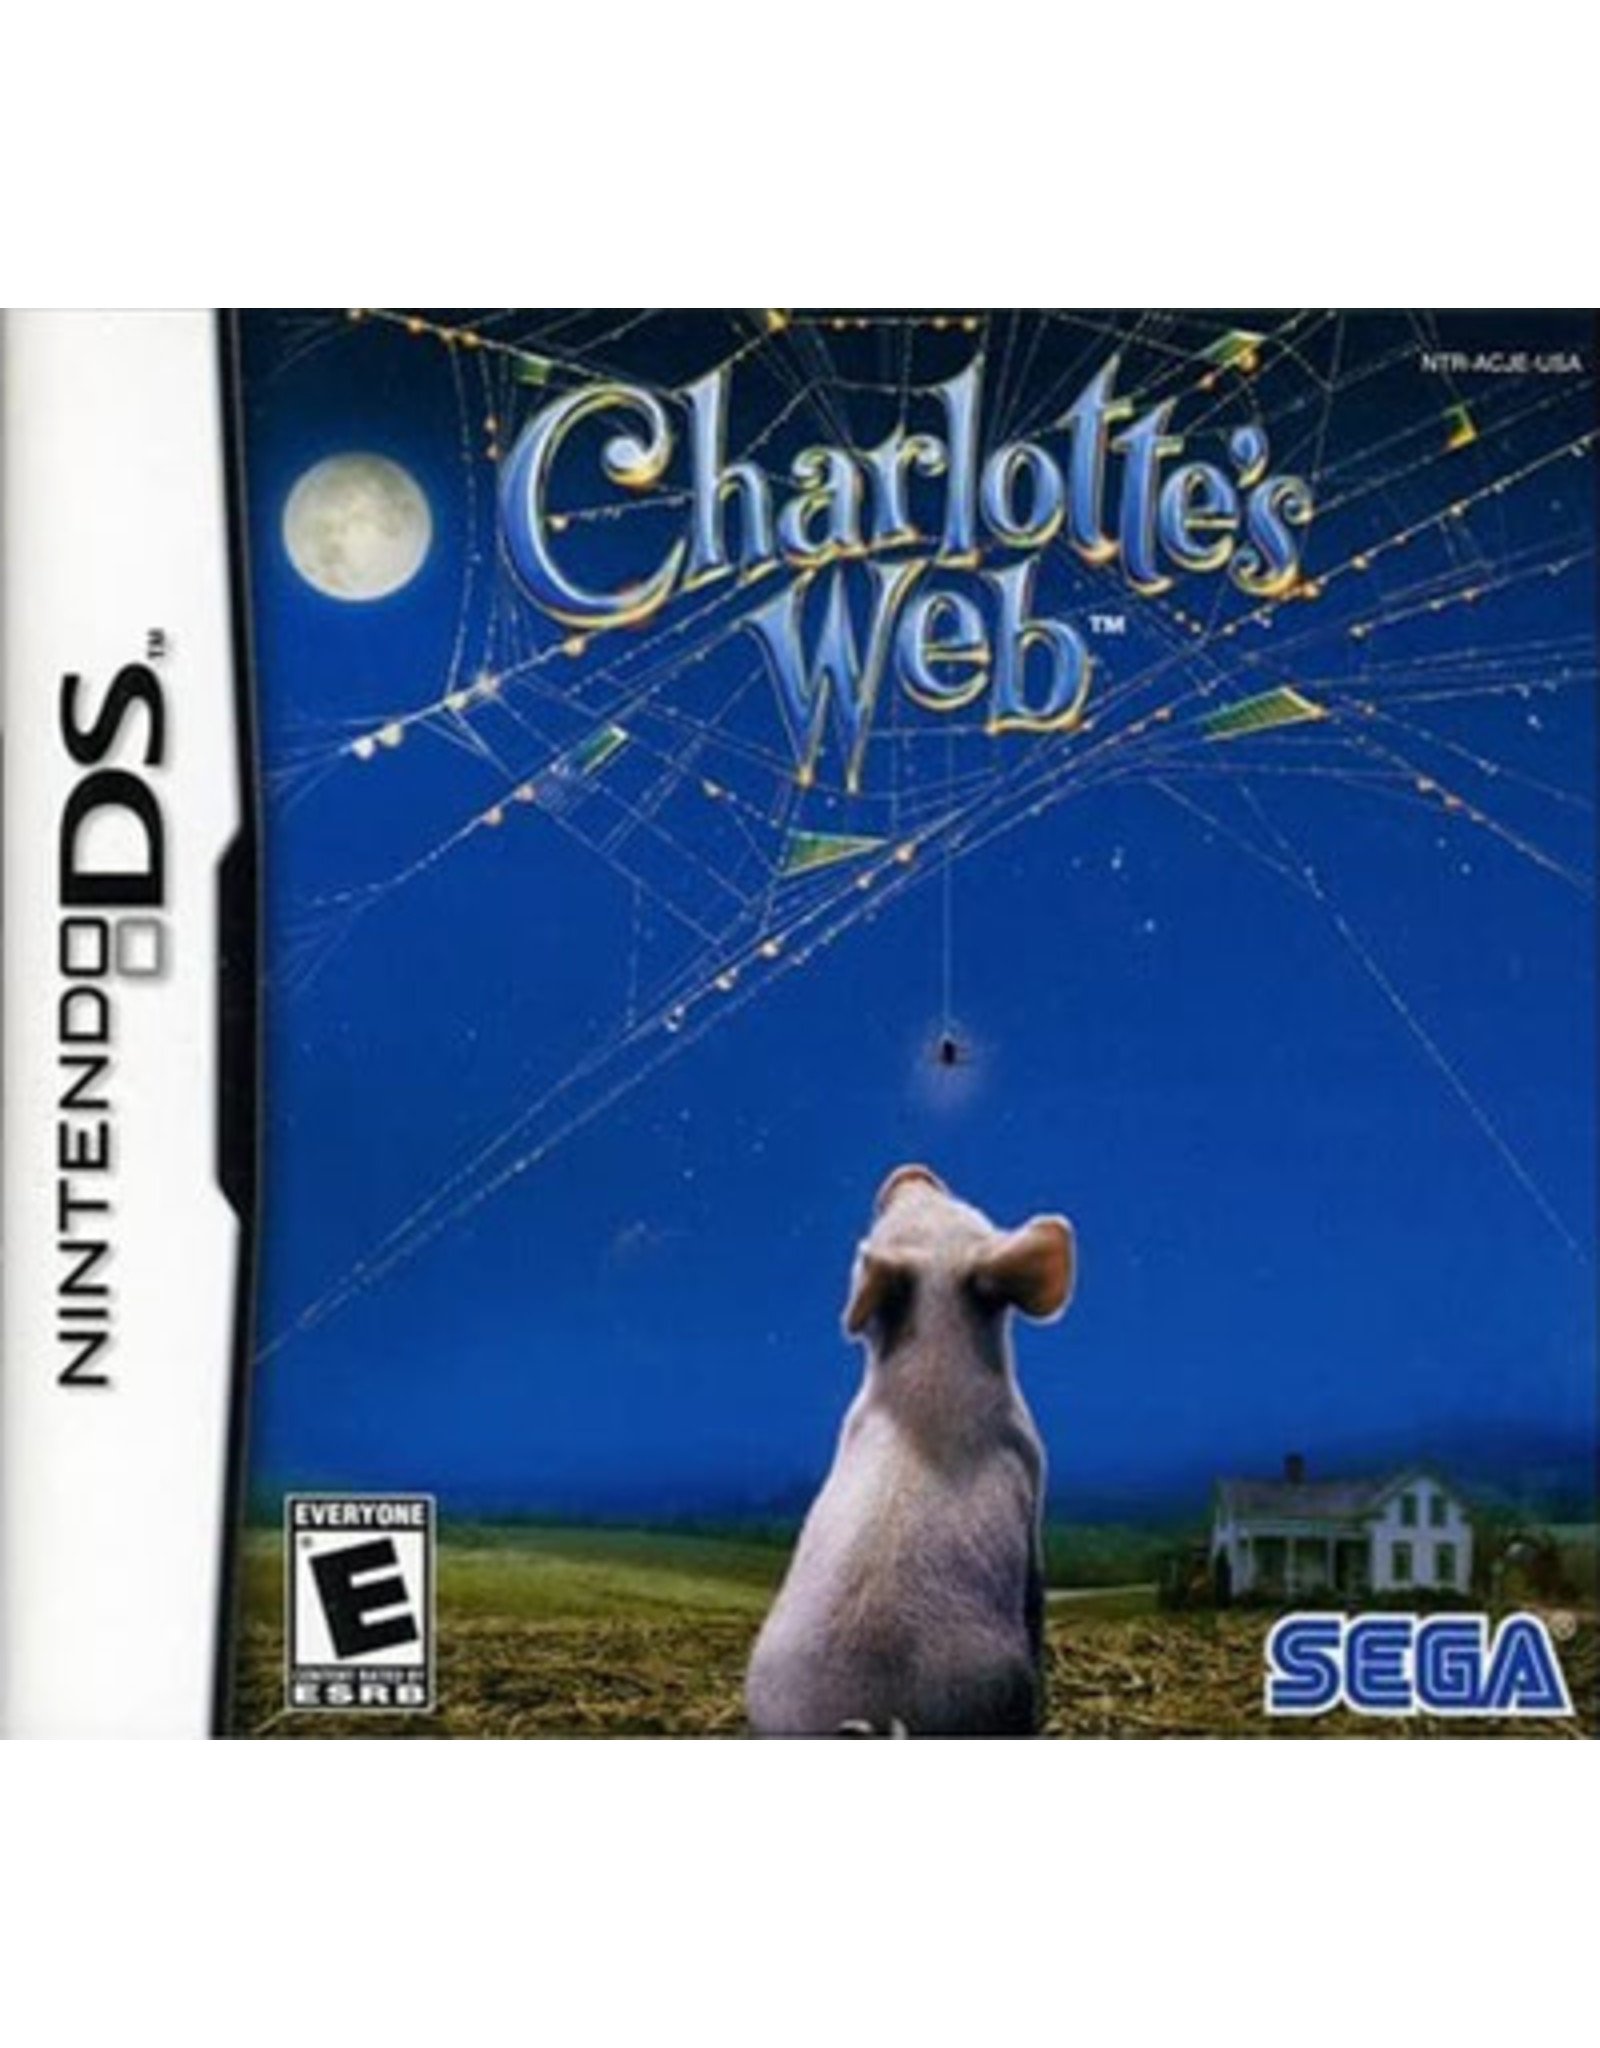 Nintendo DS Charlotte's Web (CiB)